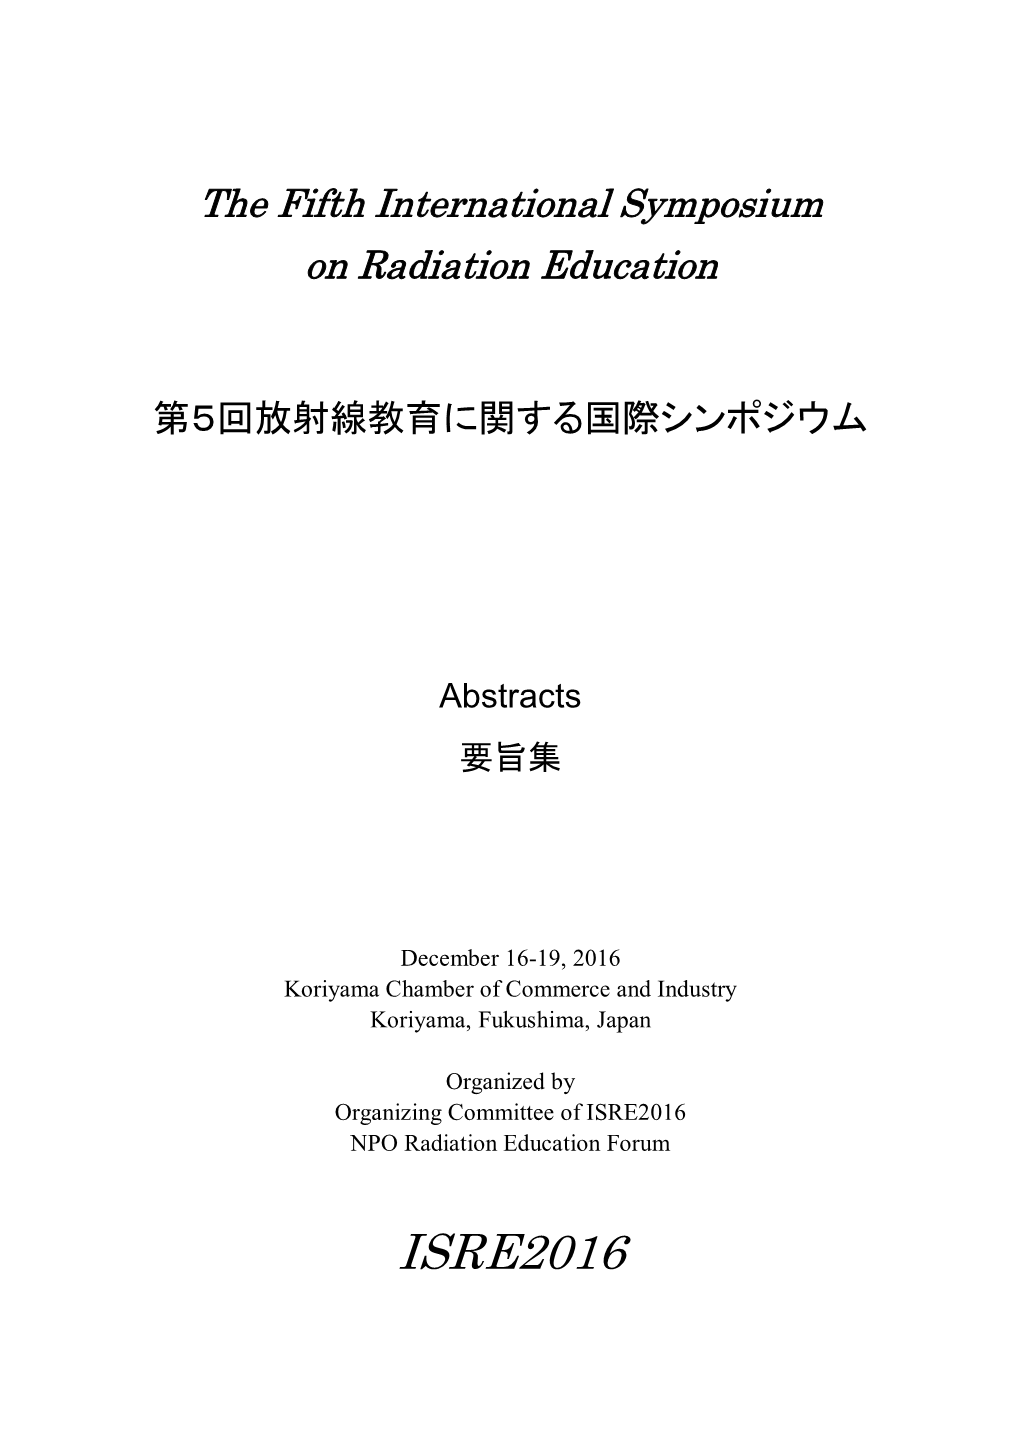 ISRE2016 NPO Radiation Education Forum